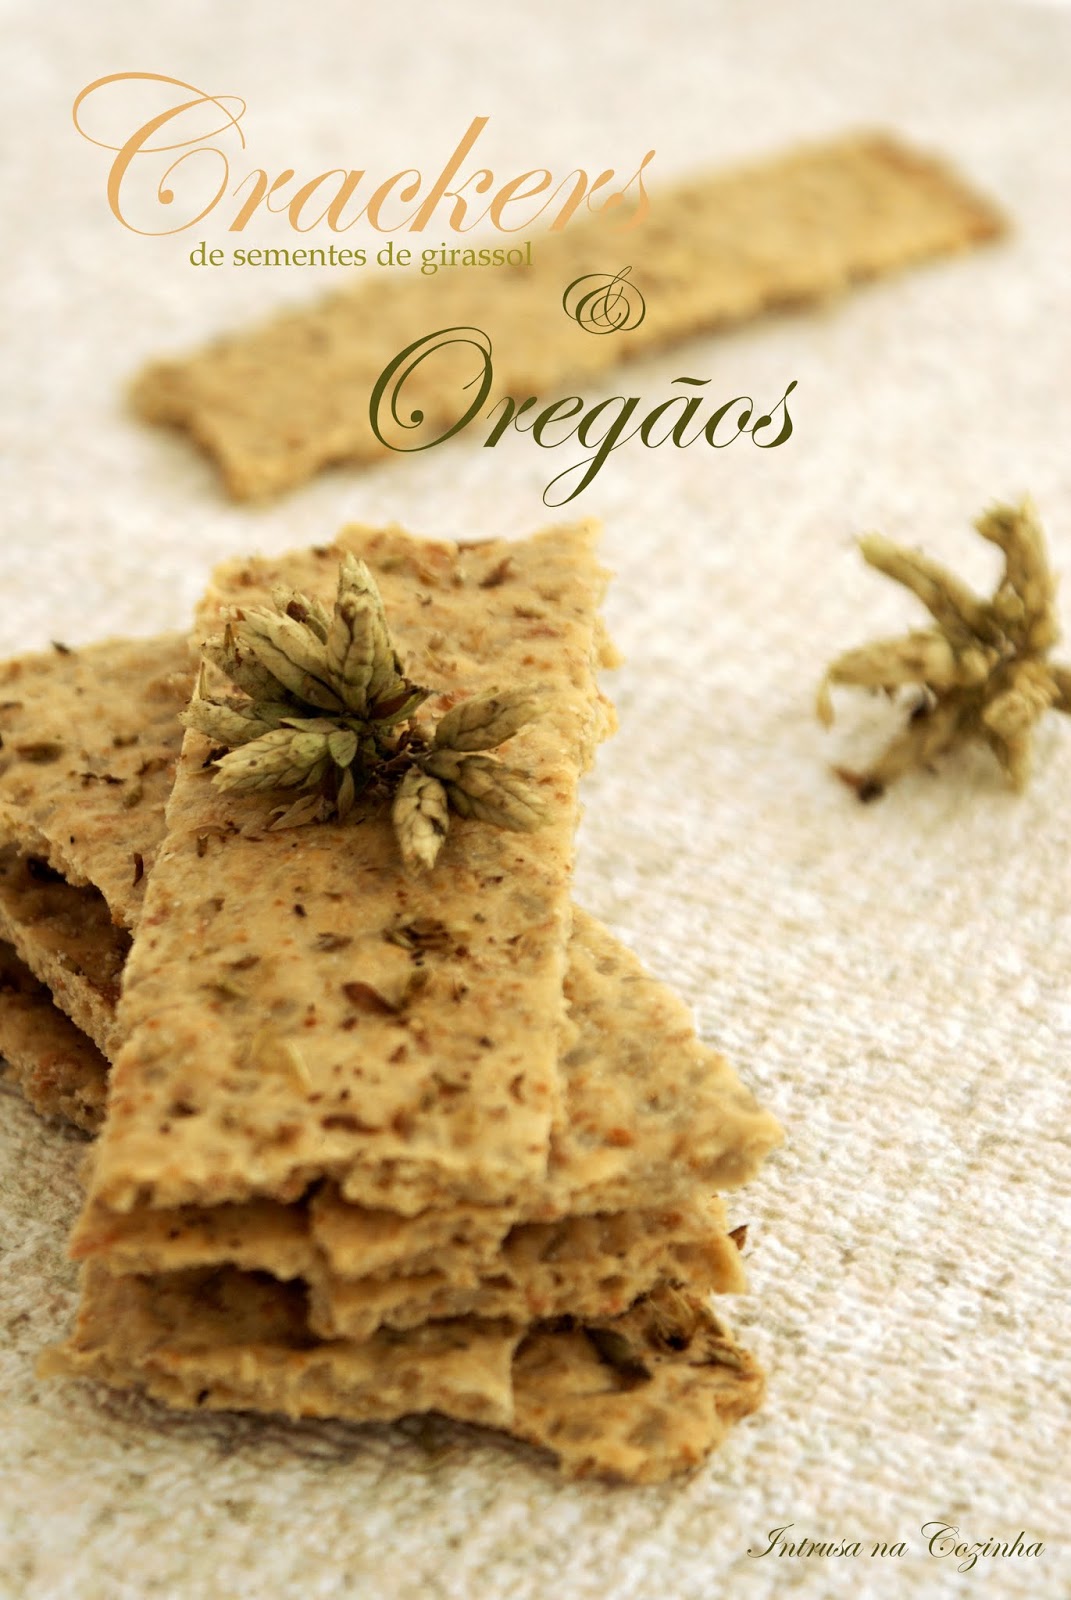 Crackers de Sementes de Girassol e Oregãos